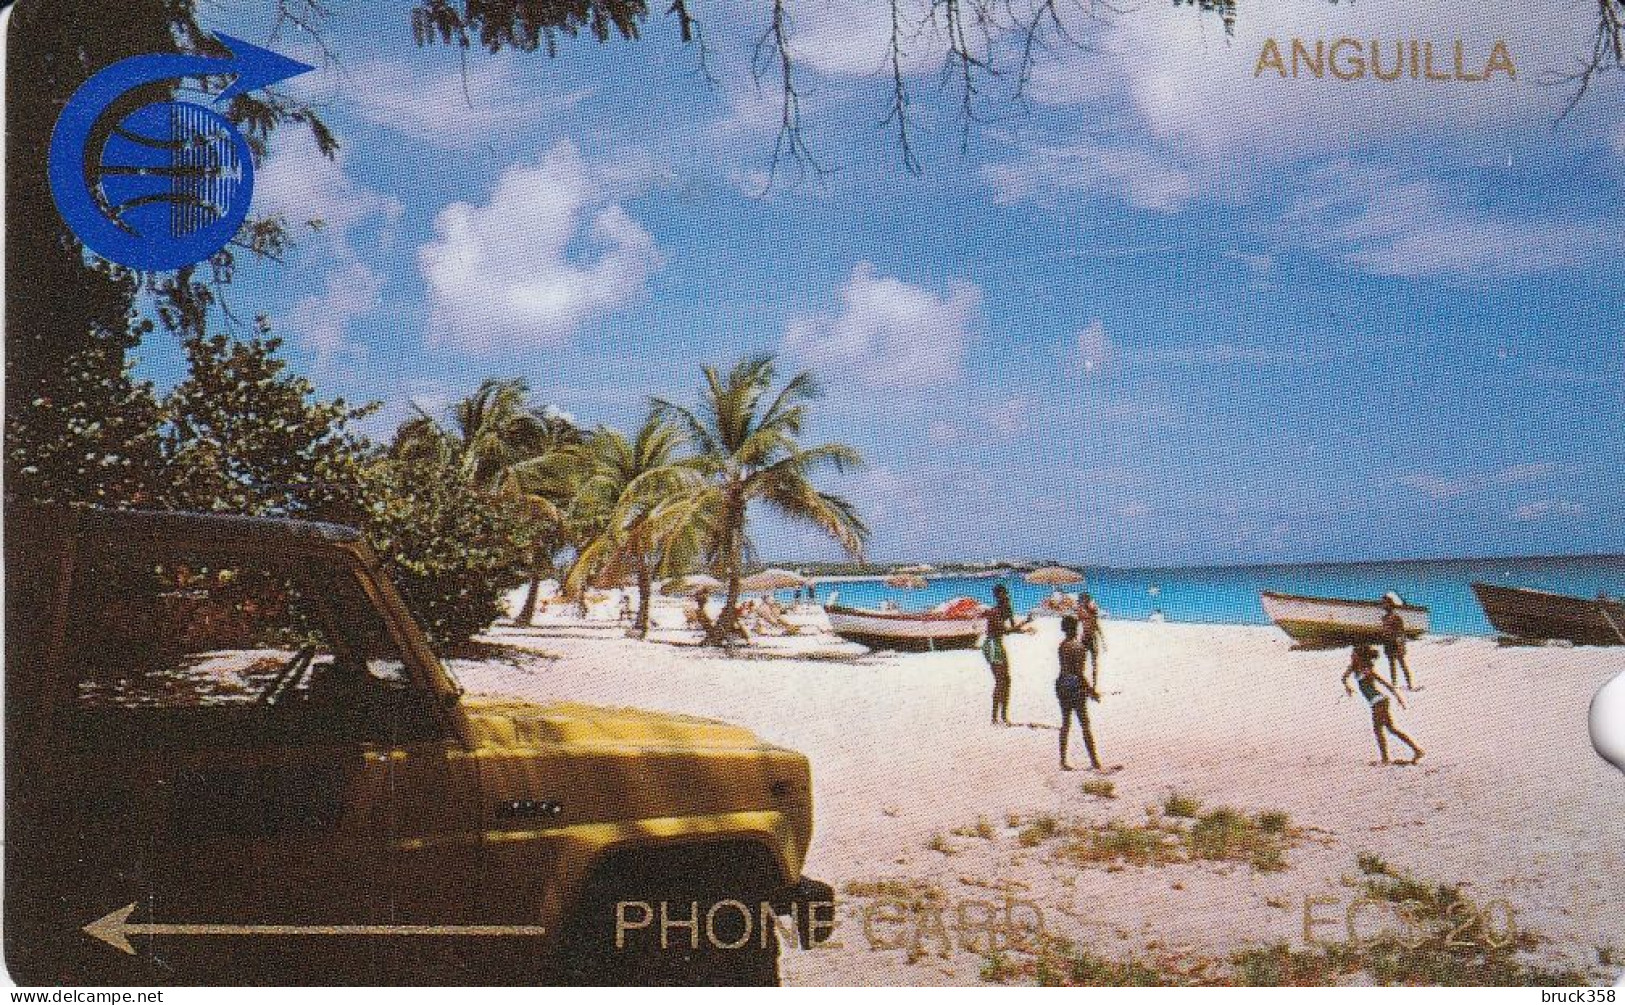 ANGUILLA-1 CAGC - Anguilla